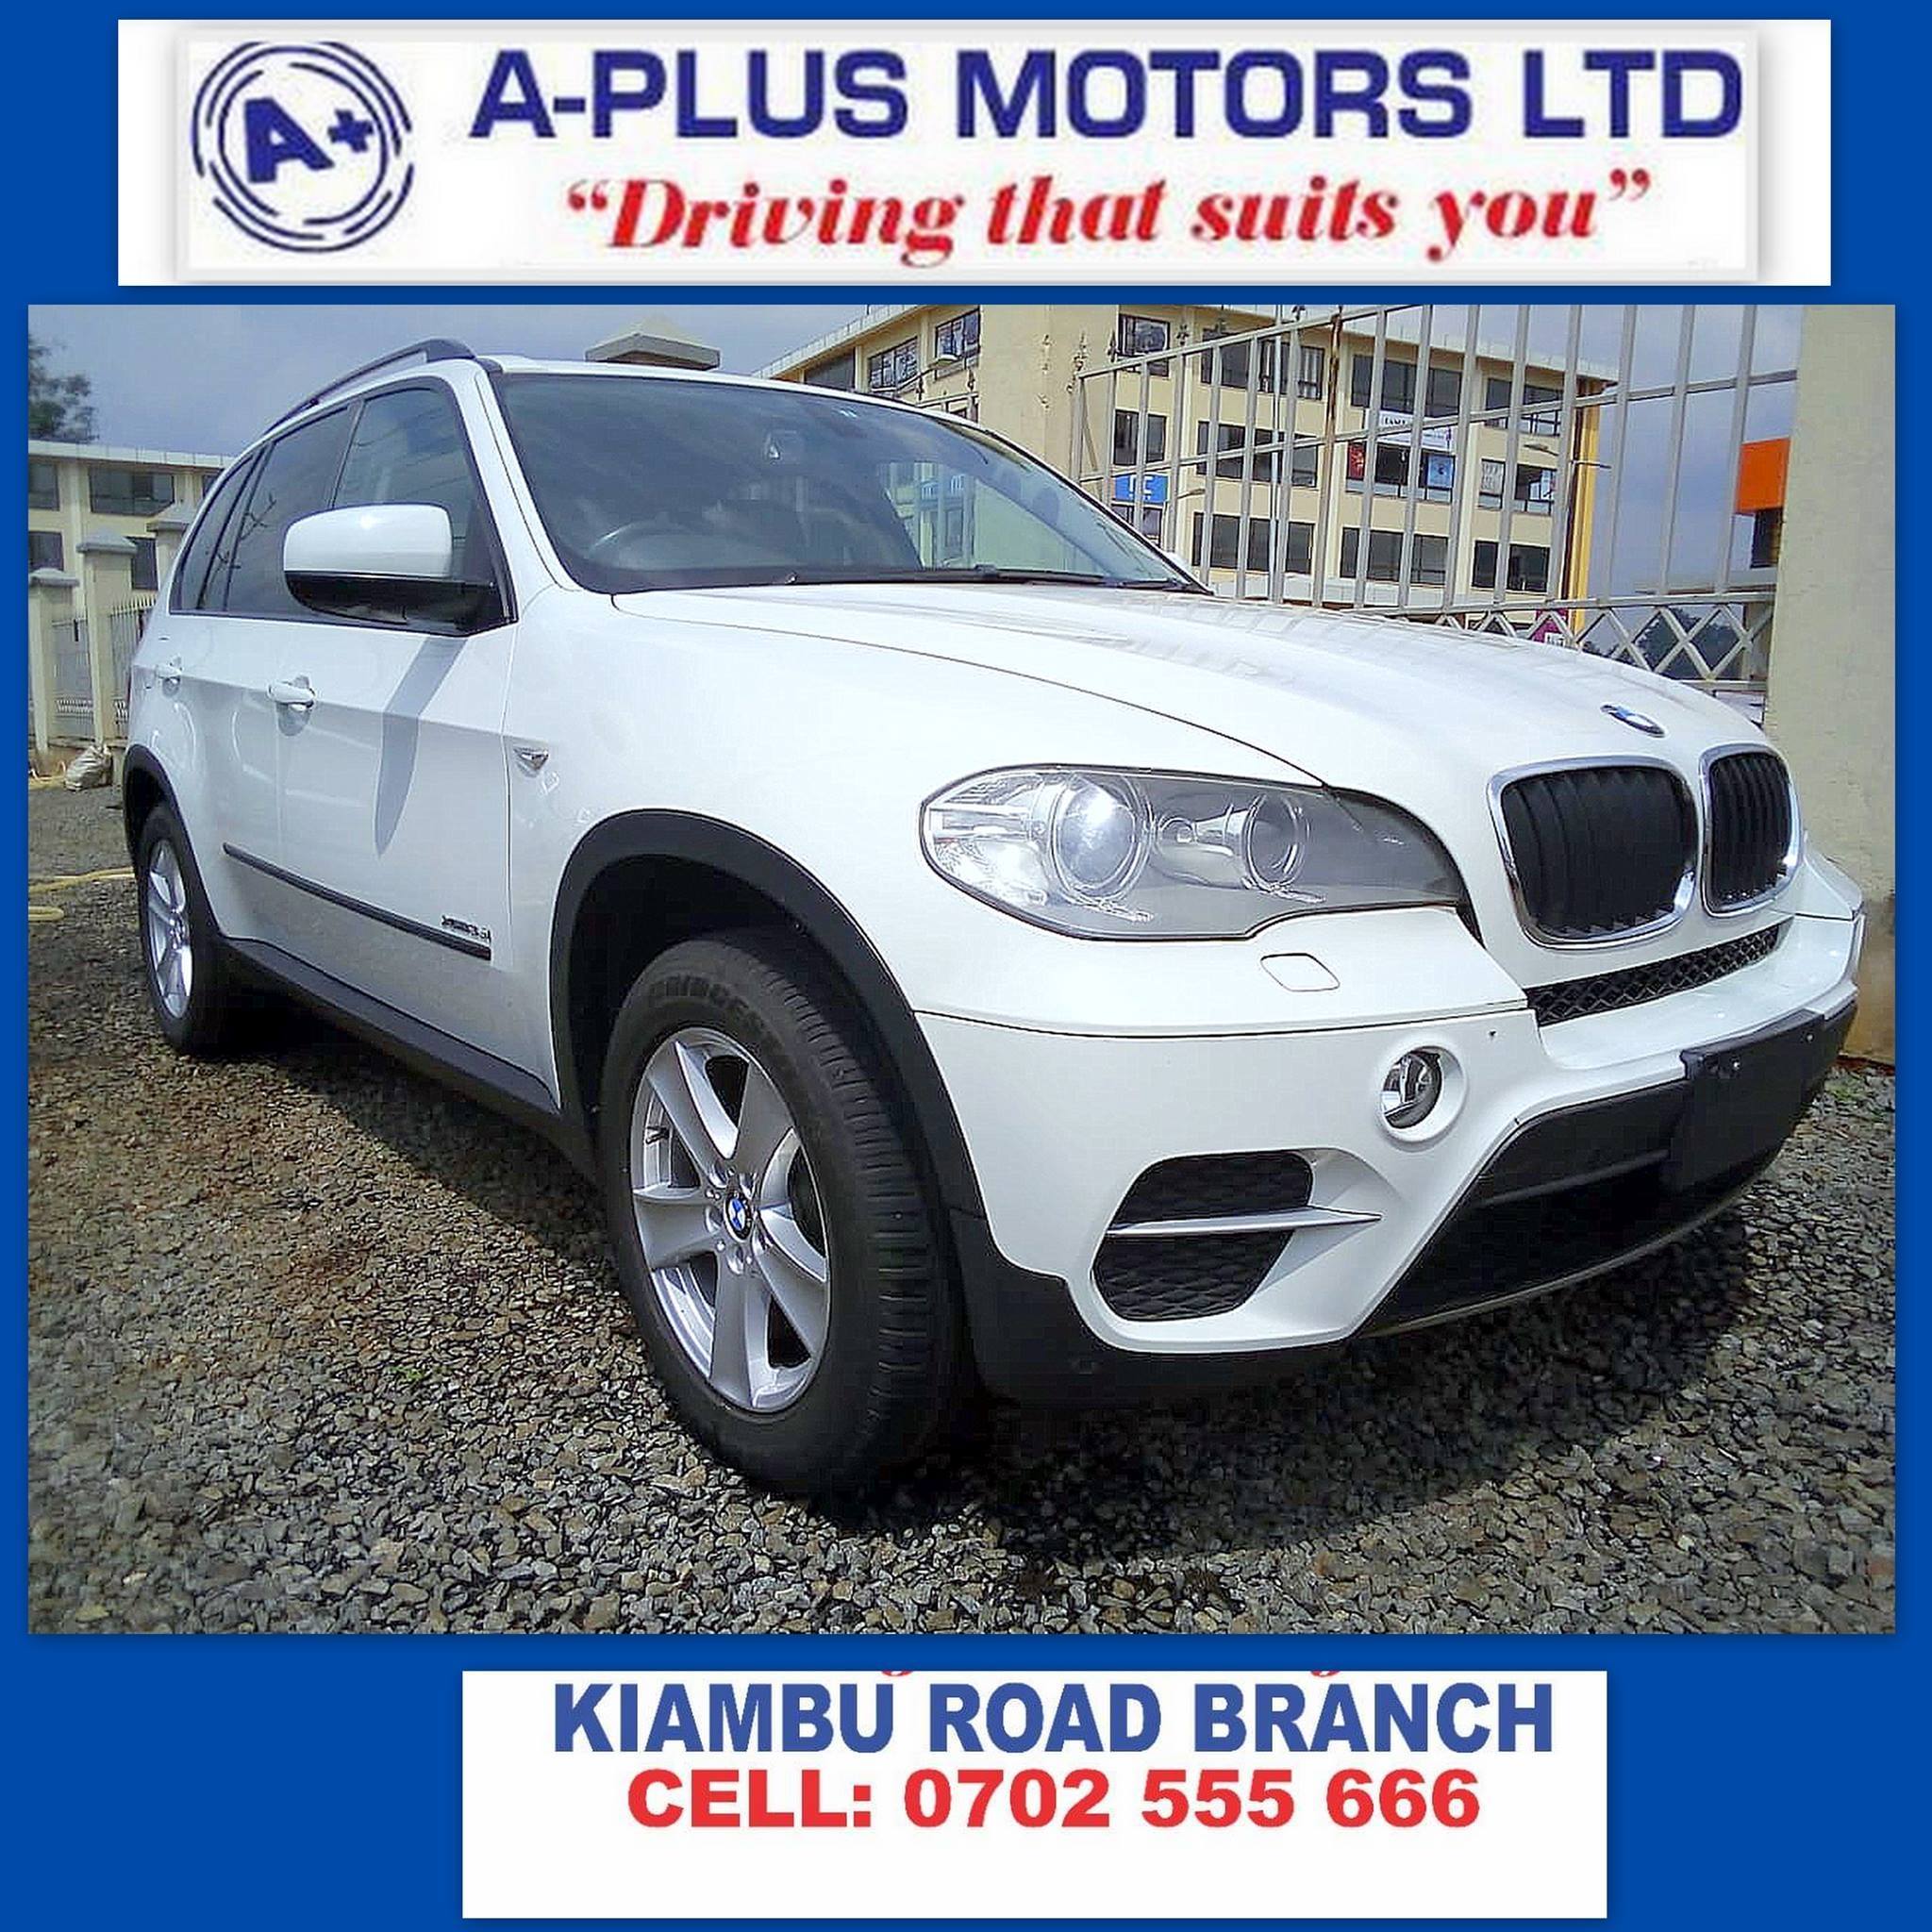 A-Plus Motors Ltd Kiambu Branch